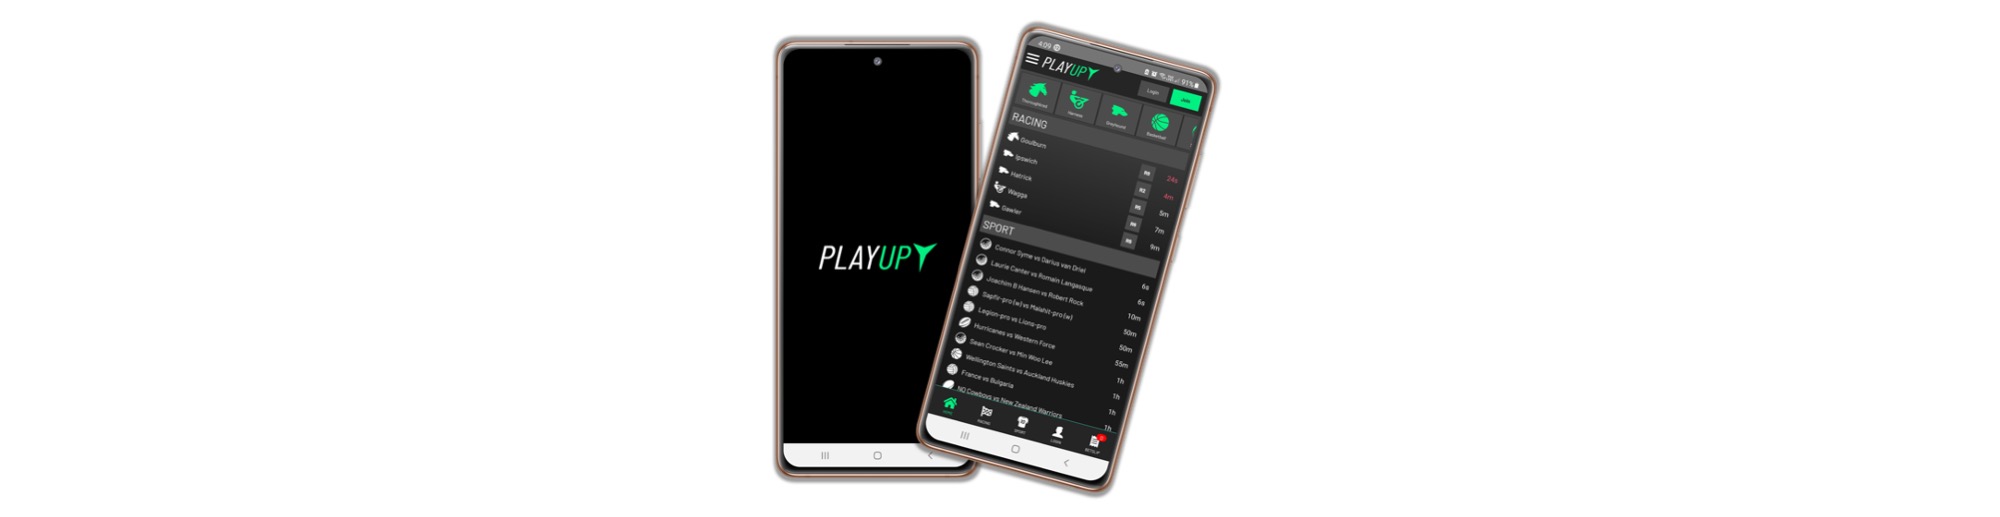 PlayUp Phone Banner